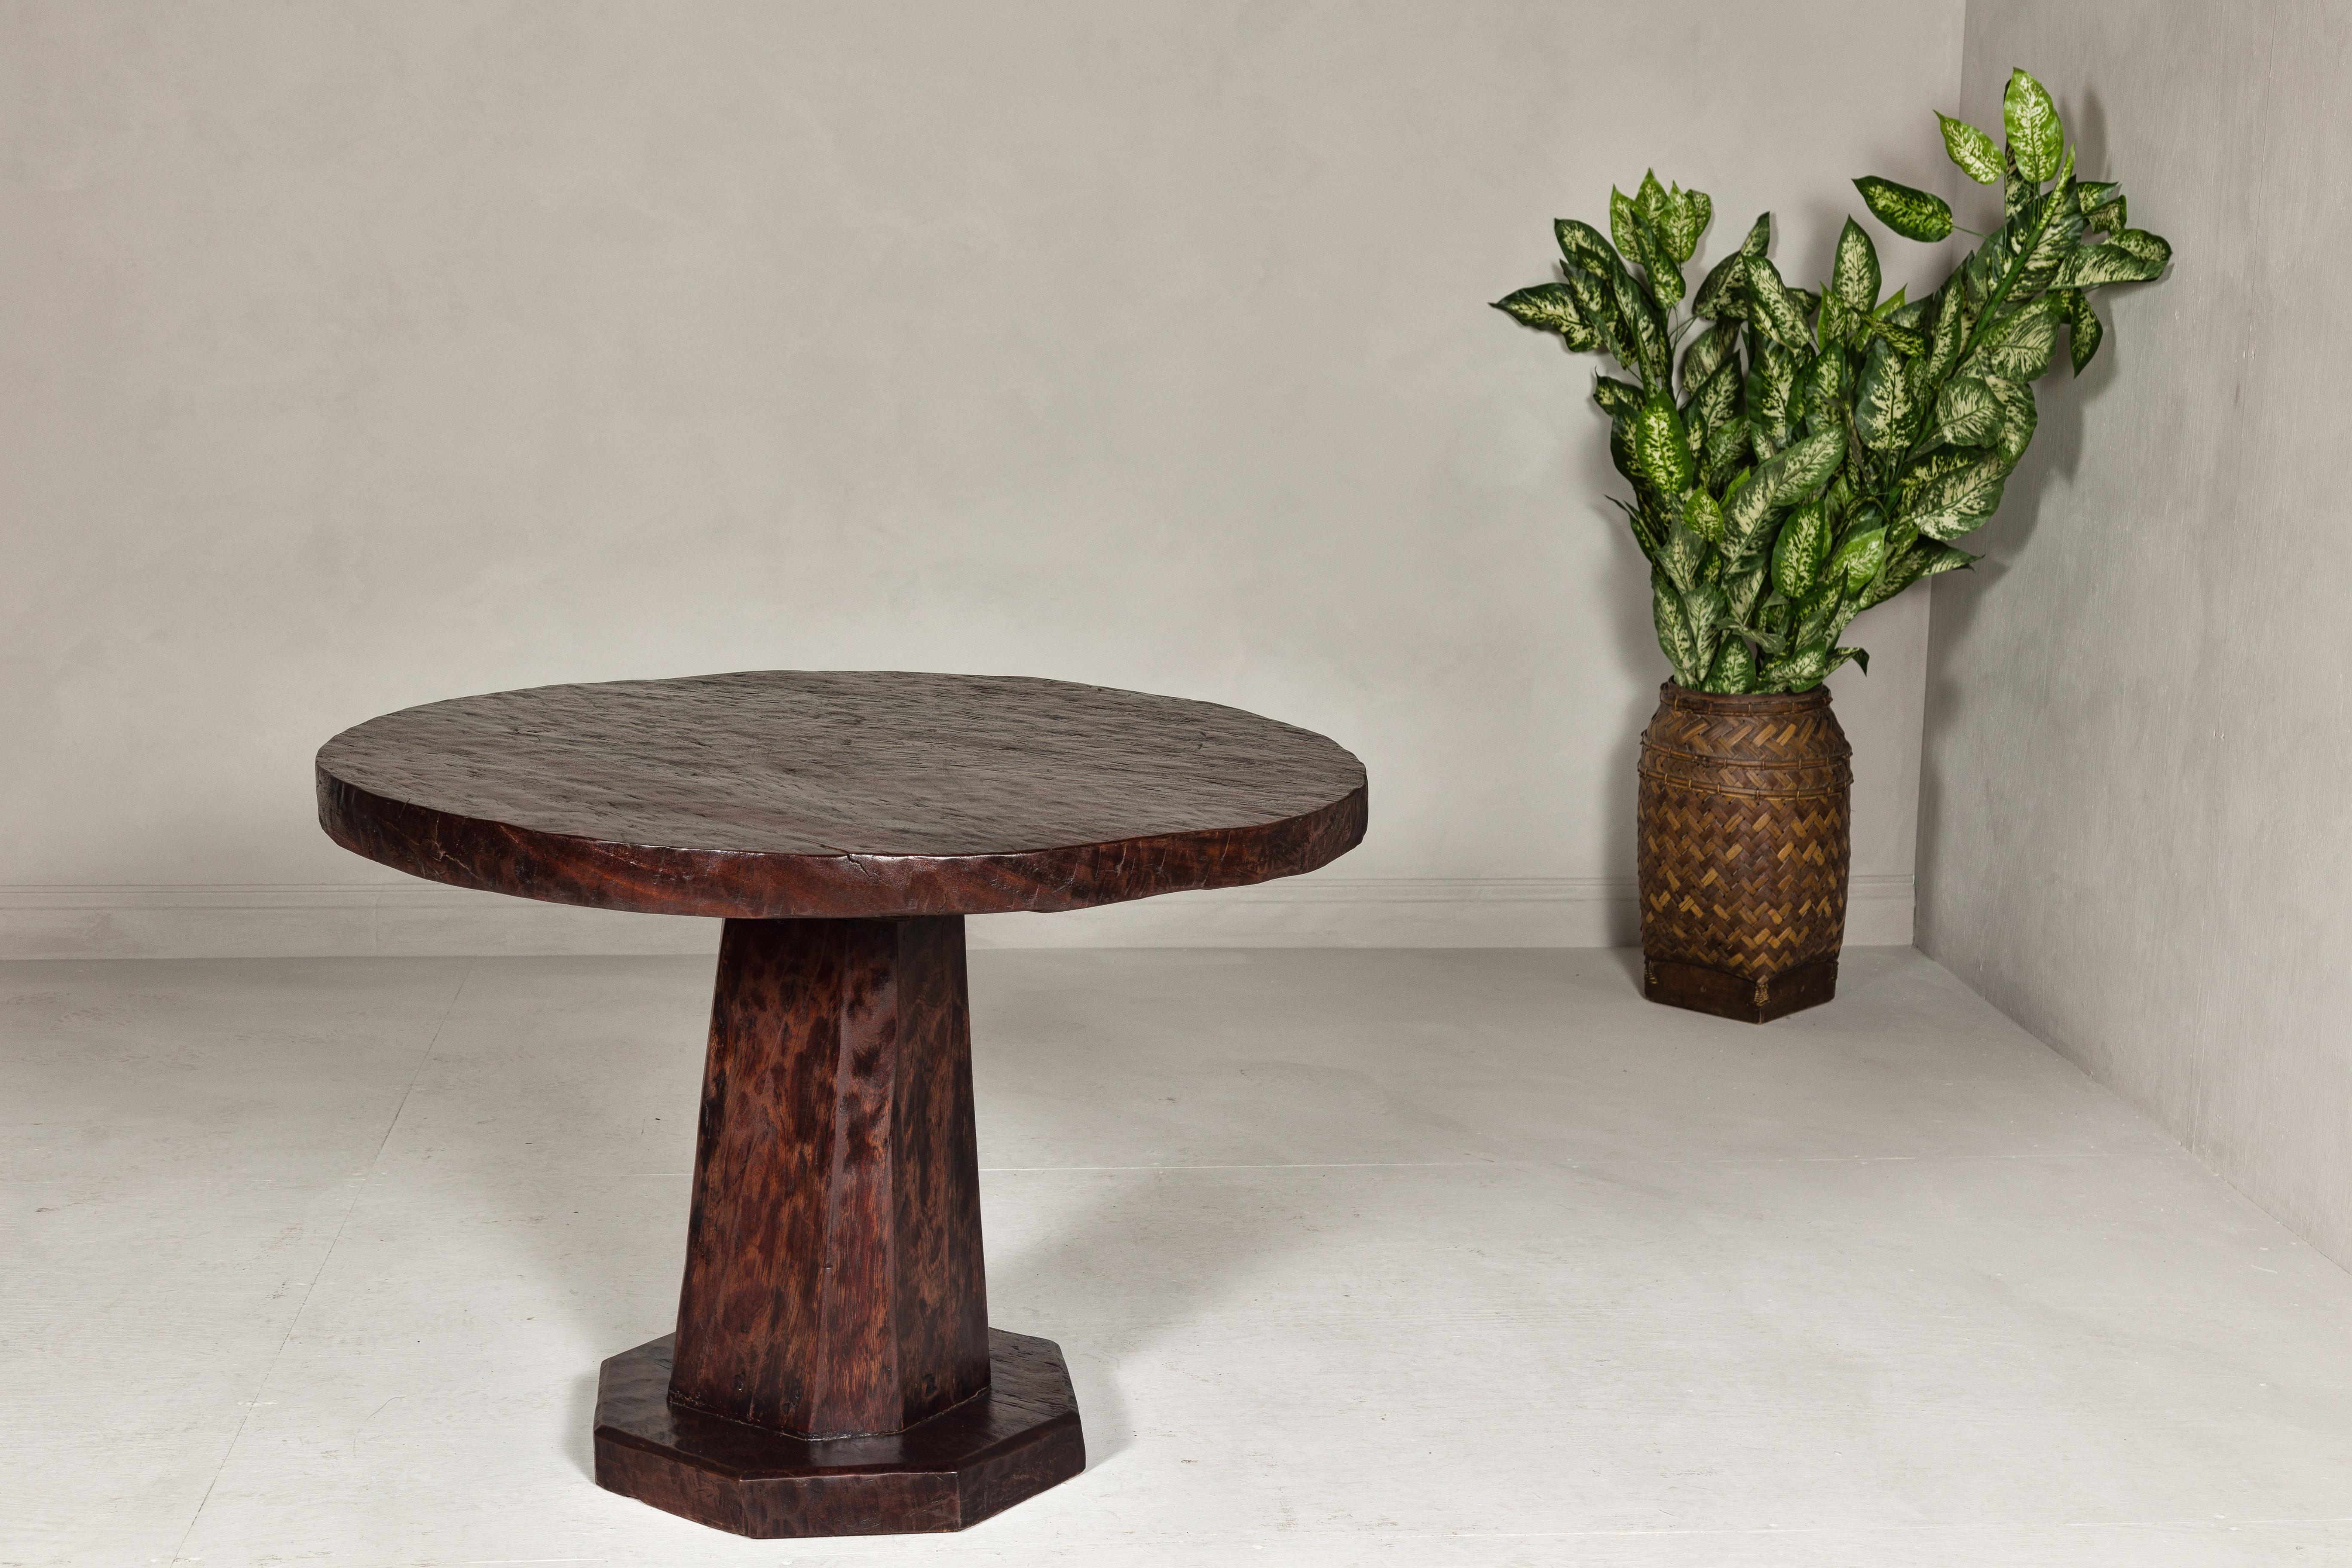 20th Century Teak Wood Round Top Center Pedestal Table with Dark Stain, Vintage For Sale